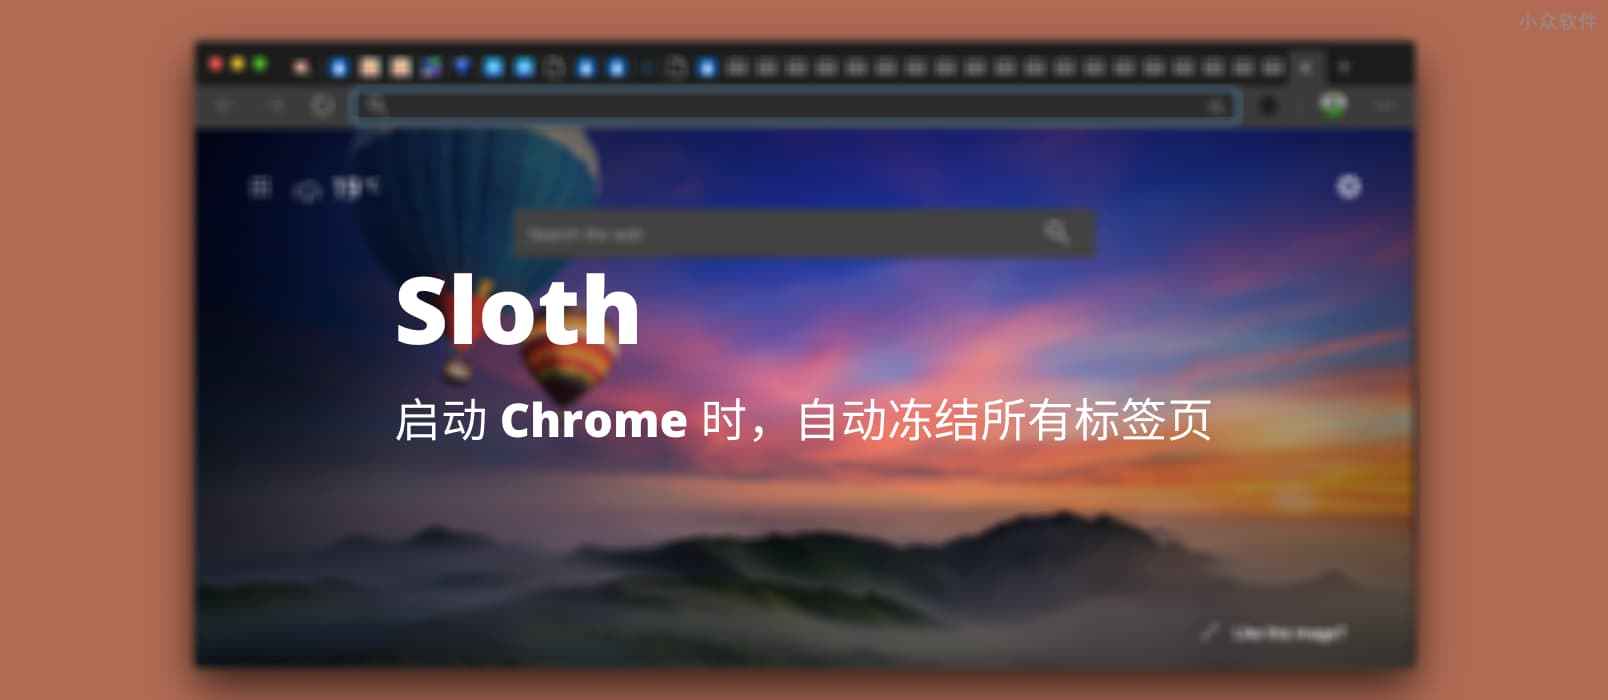 Sloth – 启动 Chrome 时，自动冻结所有标签页，减少内存占用